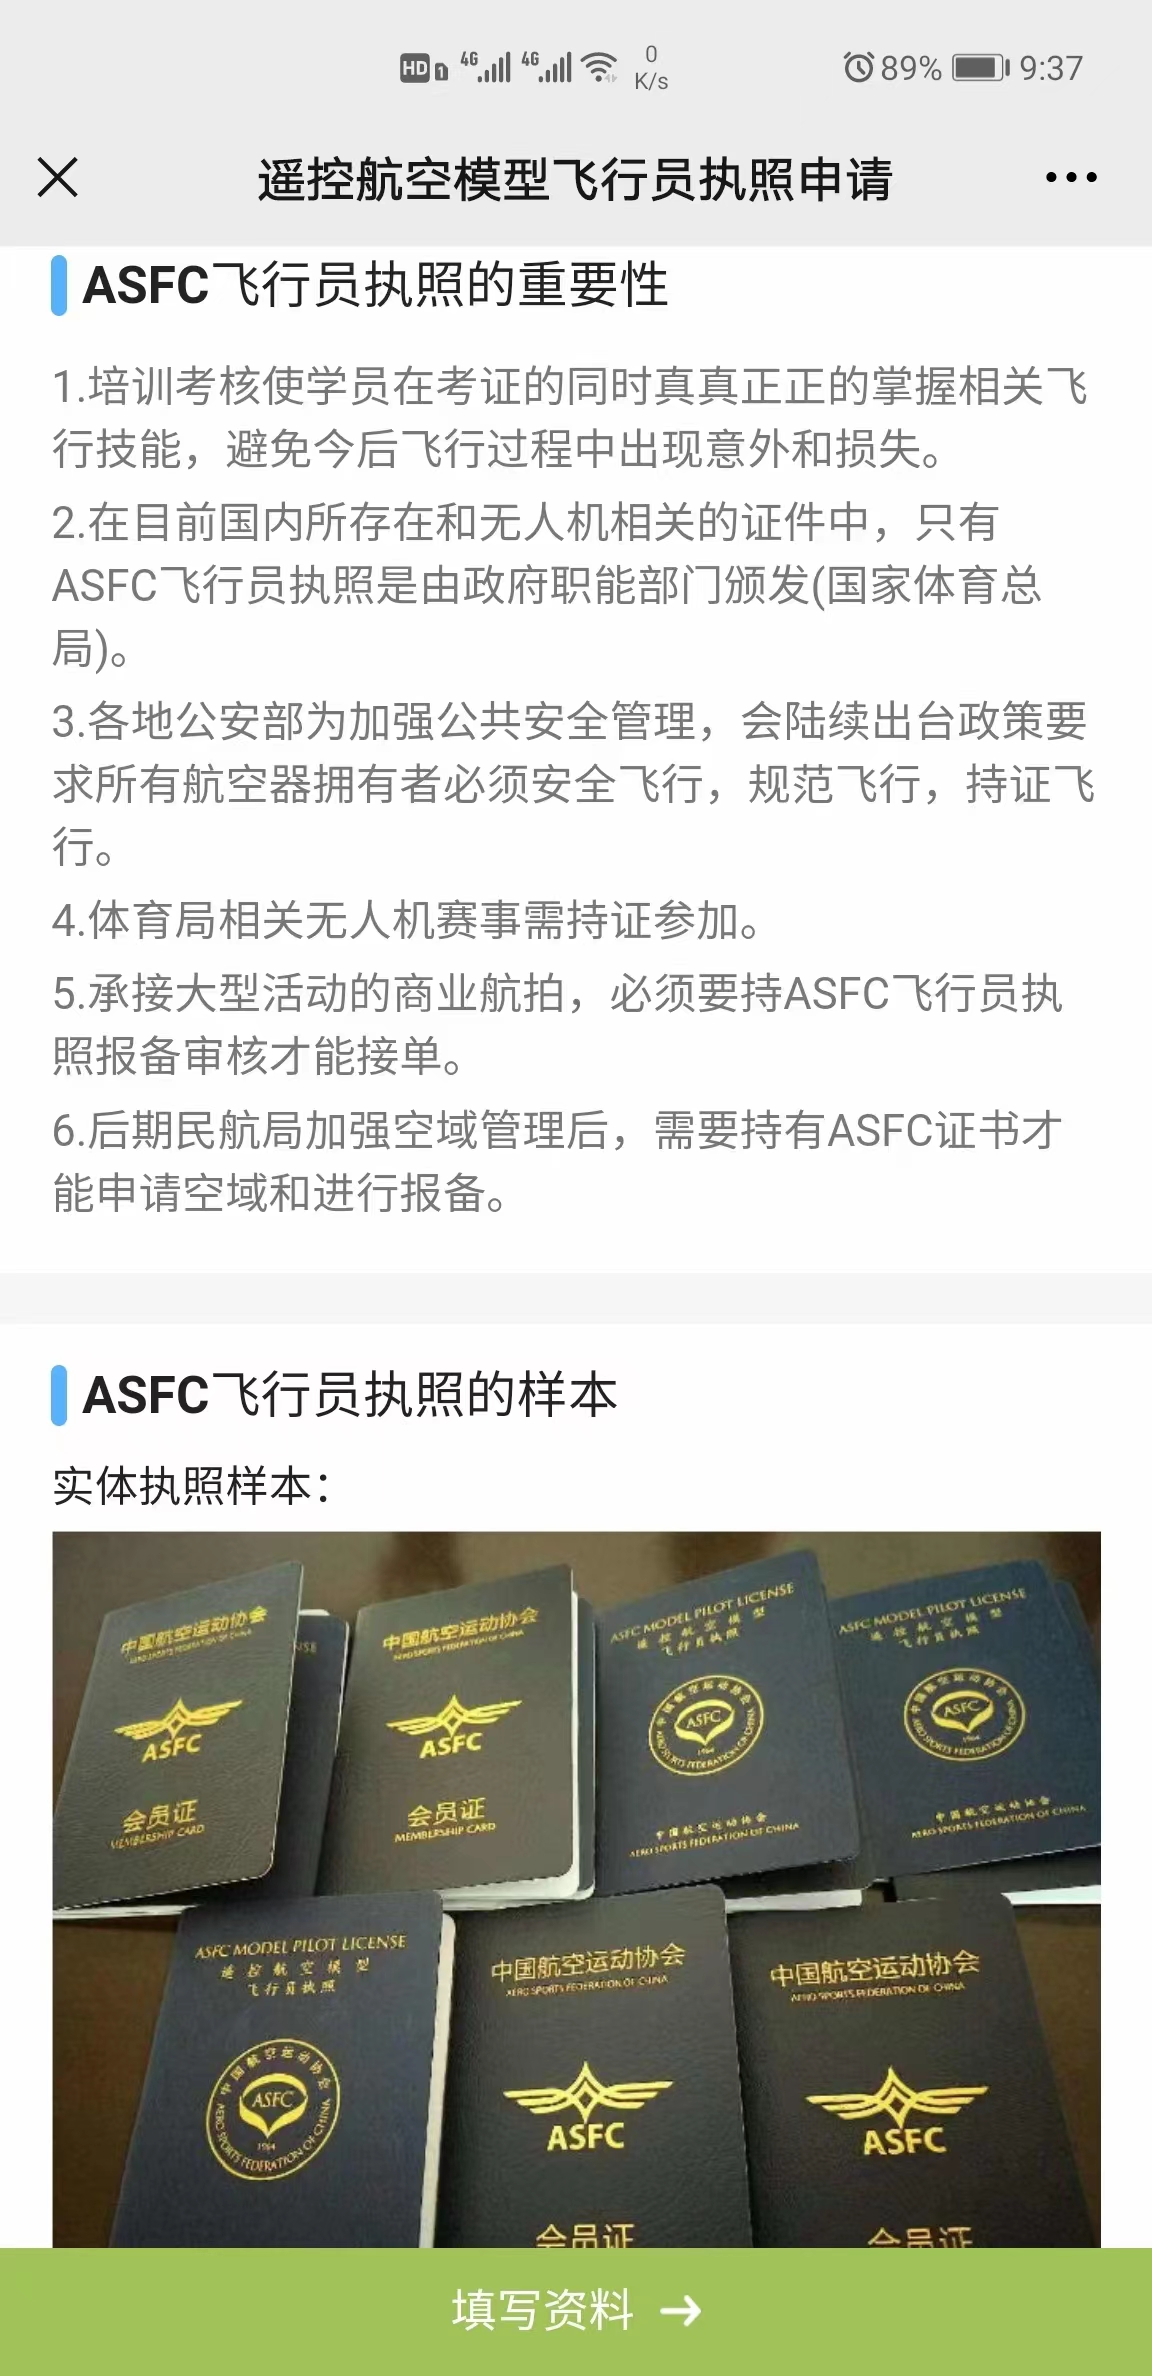 ASFC中国航空运动协会初中级证书办理